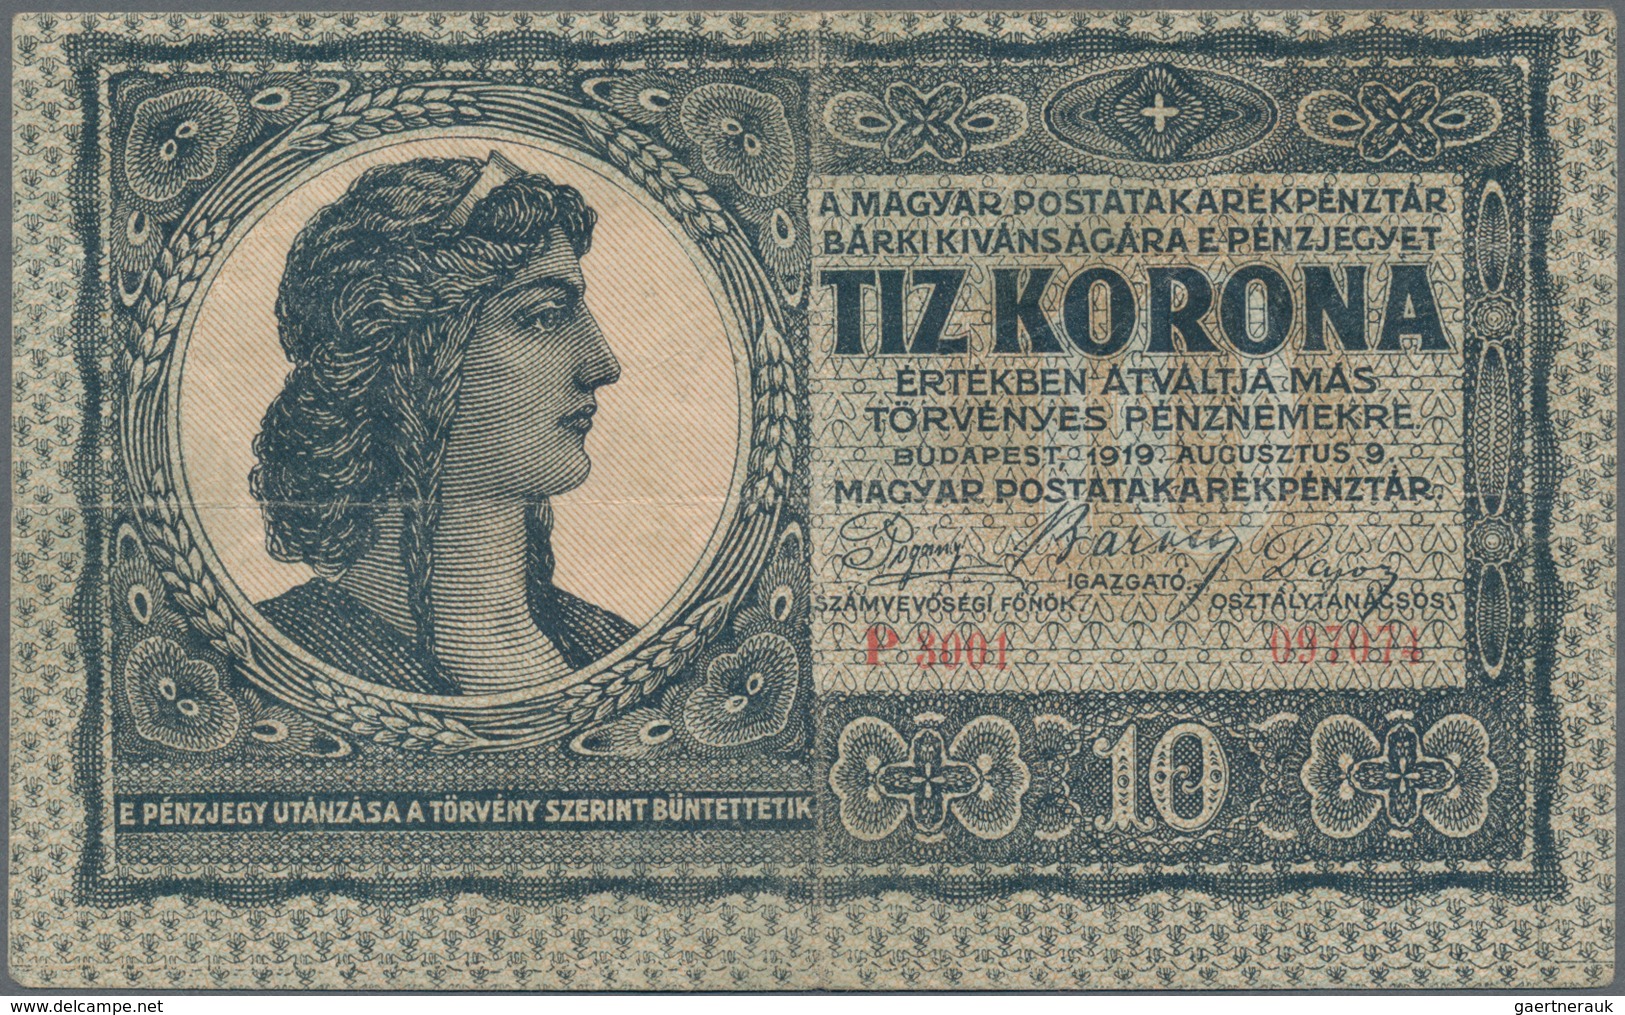 Hungary / Ungarn: Hungarian Post Office Savings Bank, set with 13 banknotes comprising 2x 5 Korona 1